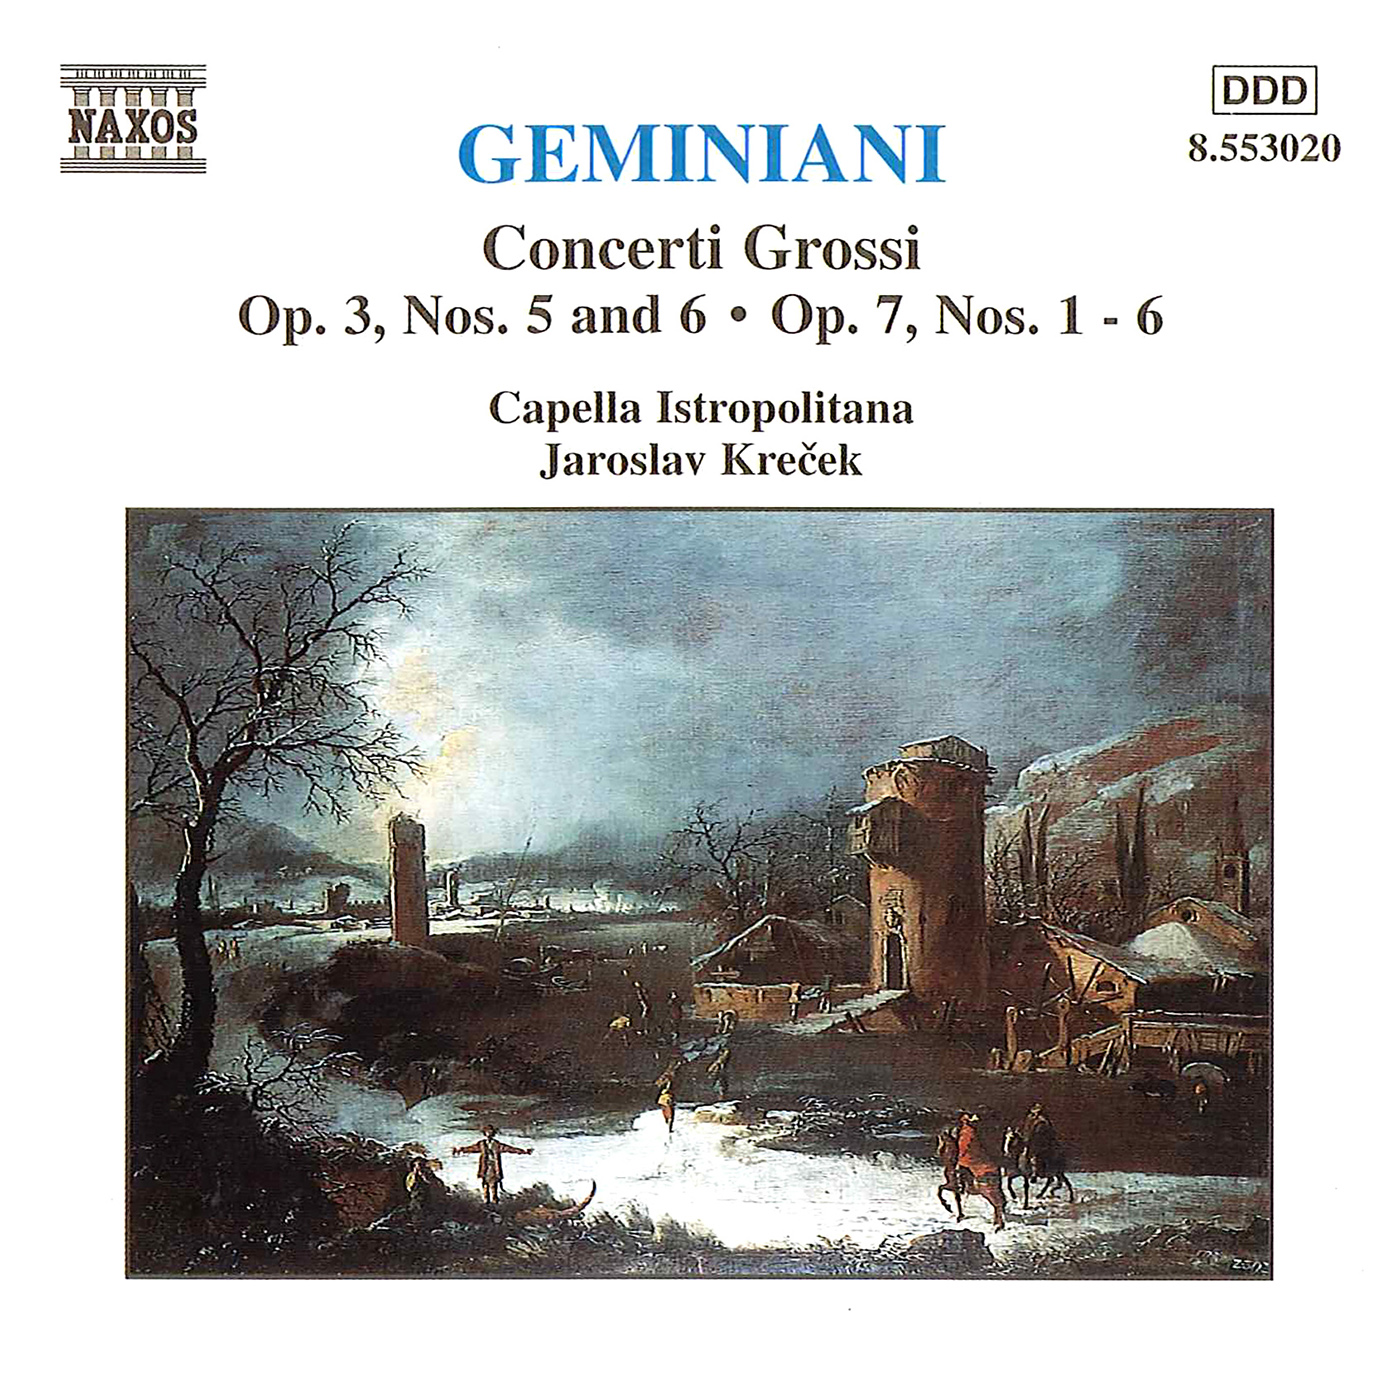 Concerto Grosso in D Minor, Op. 7, No. 4:I. Andante